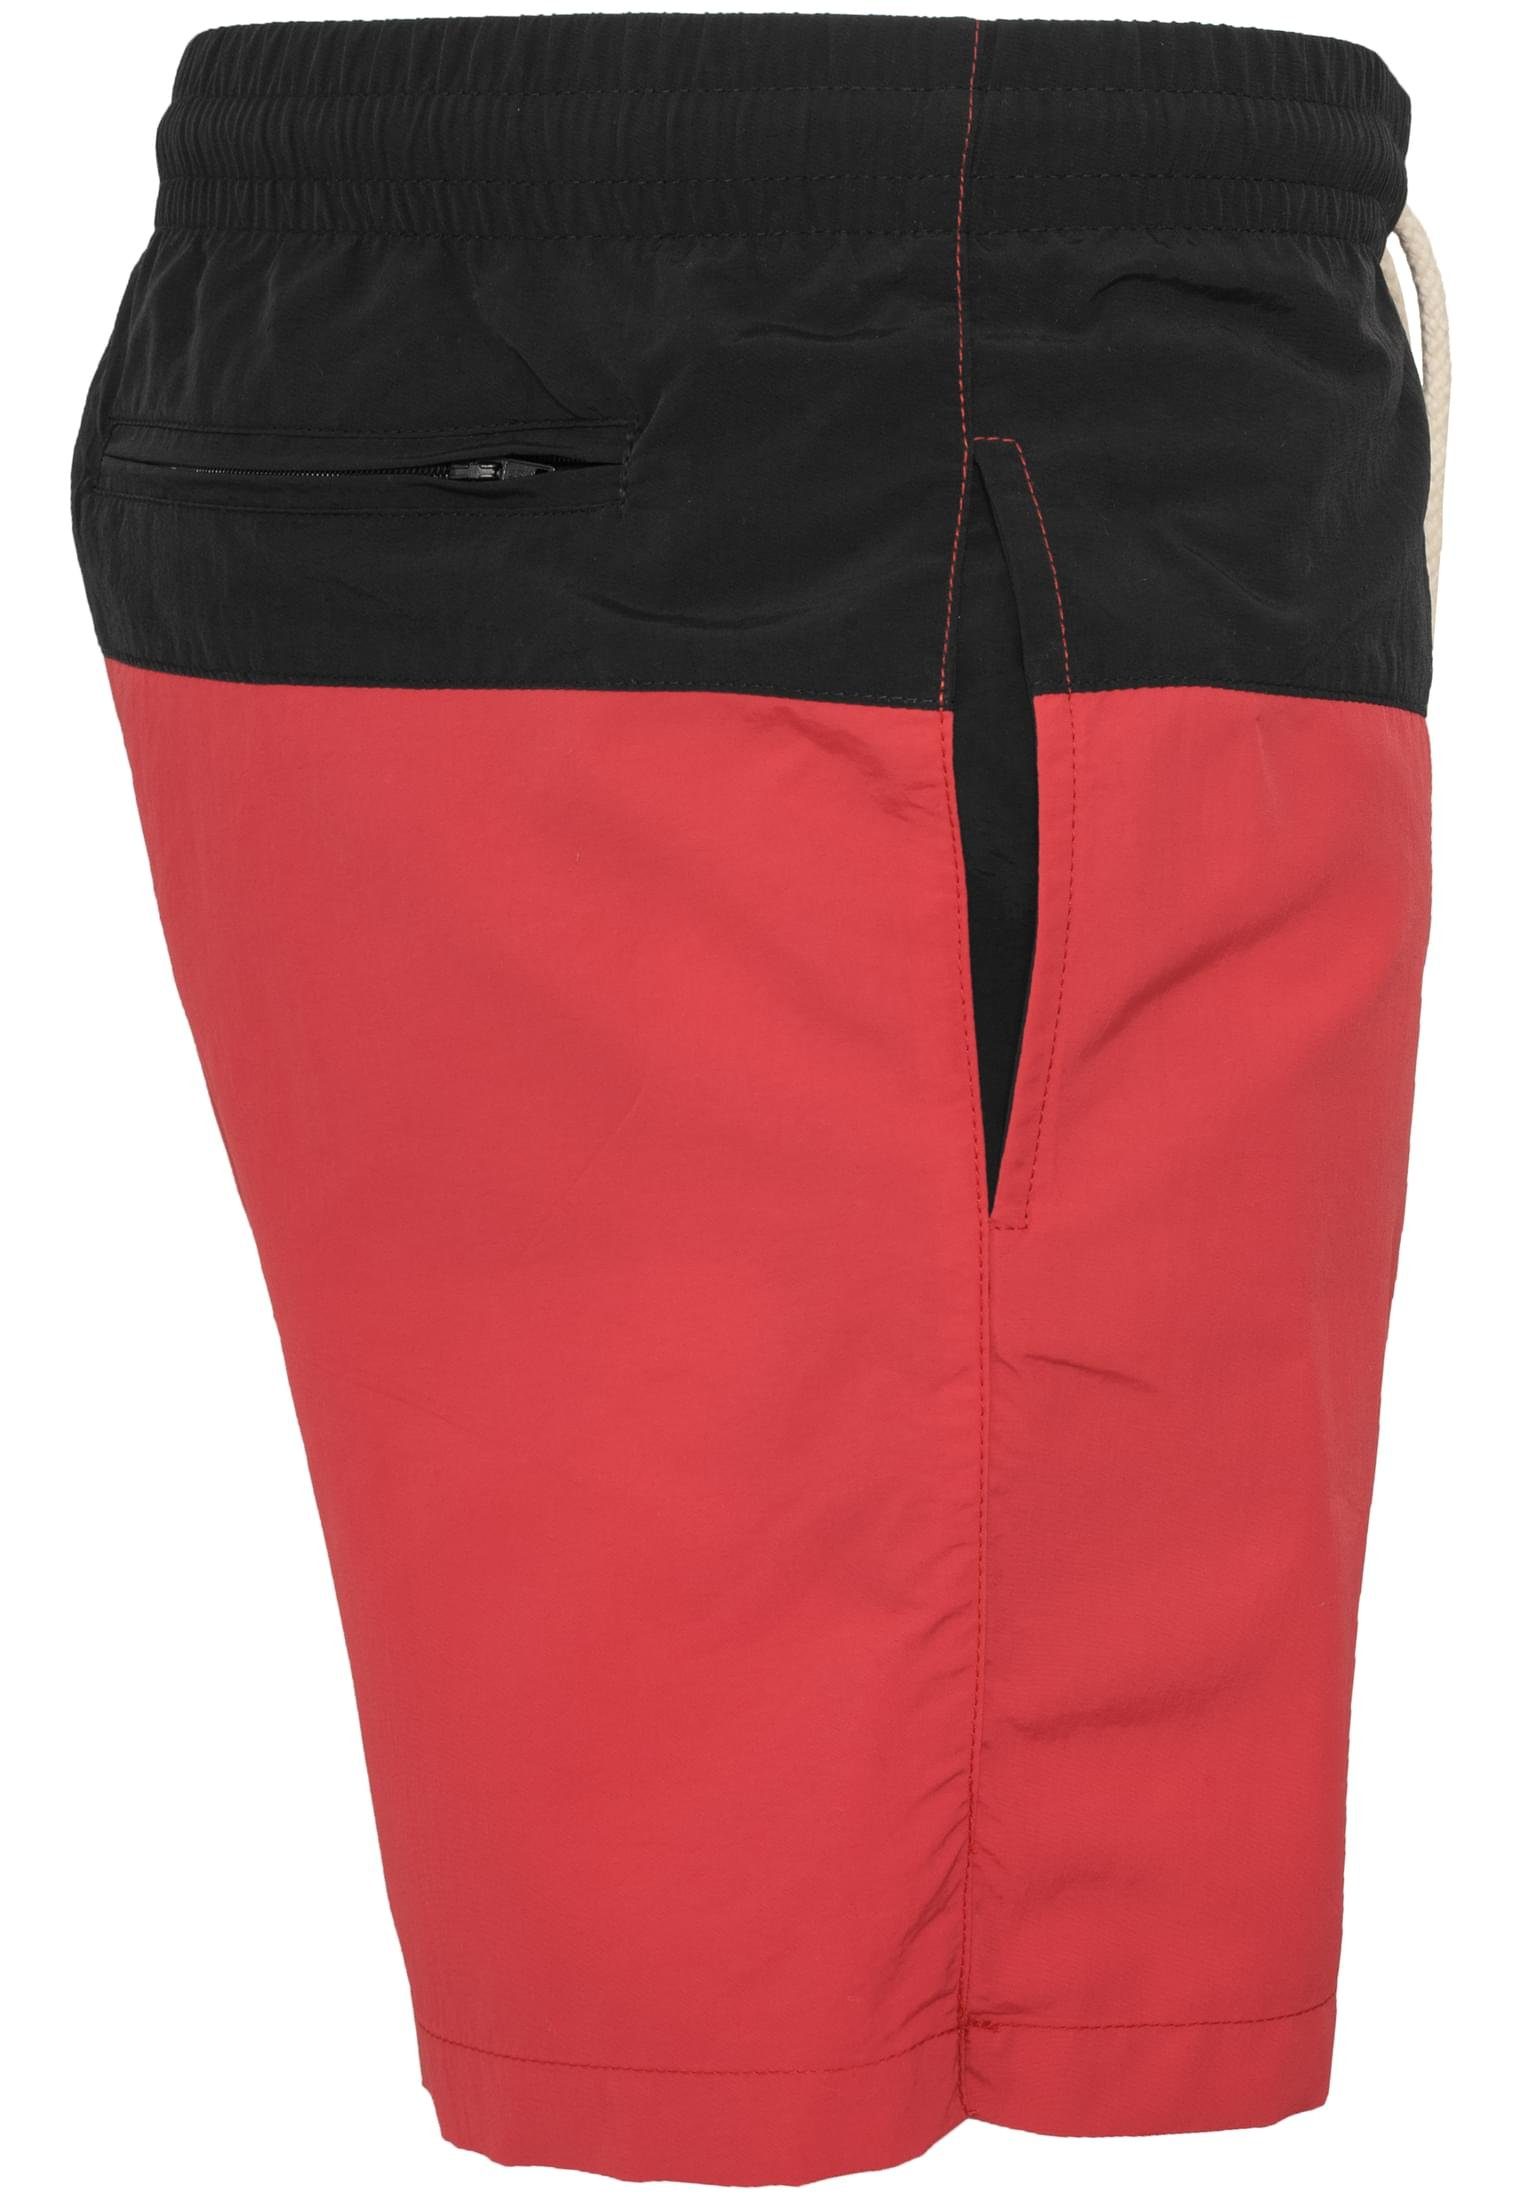 URBAN CLASSICS Shorts Herren blk/red Swim Badeshorts